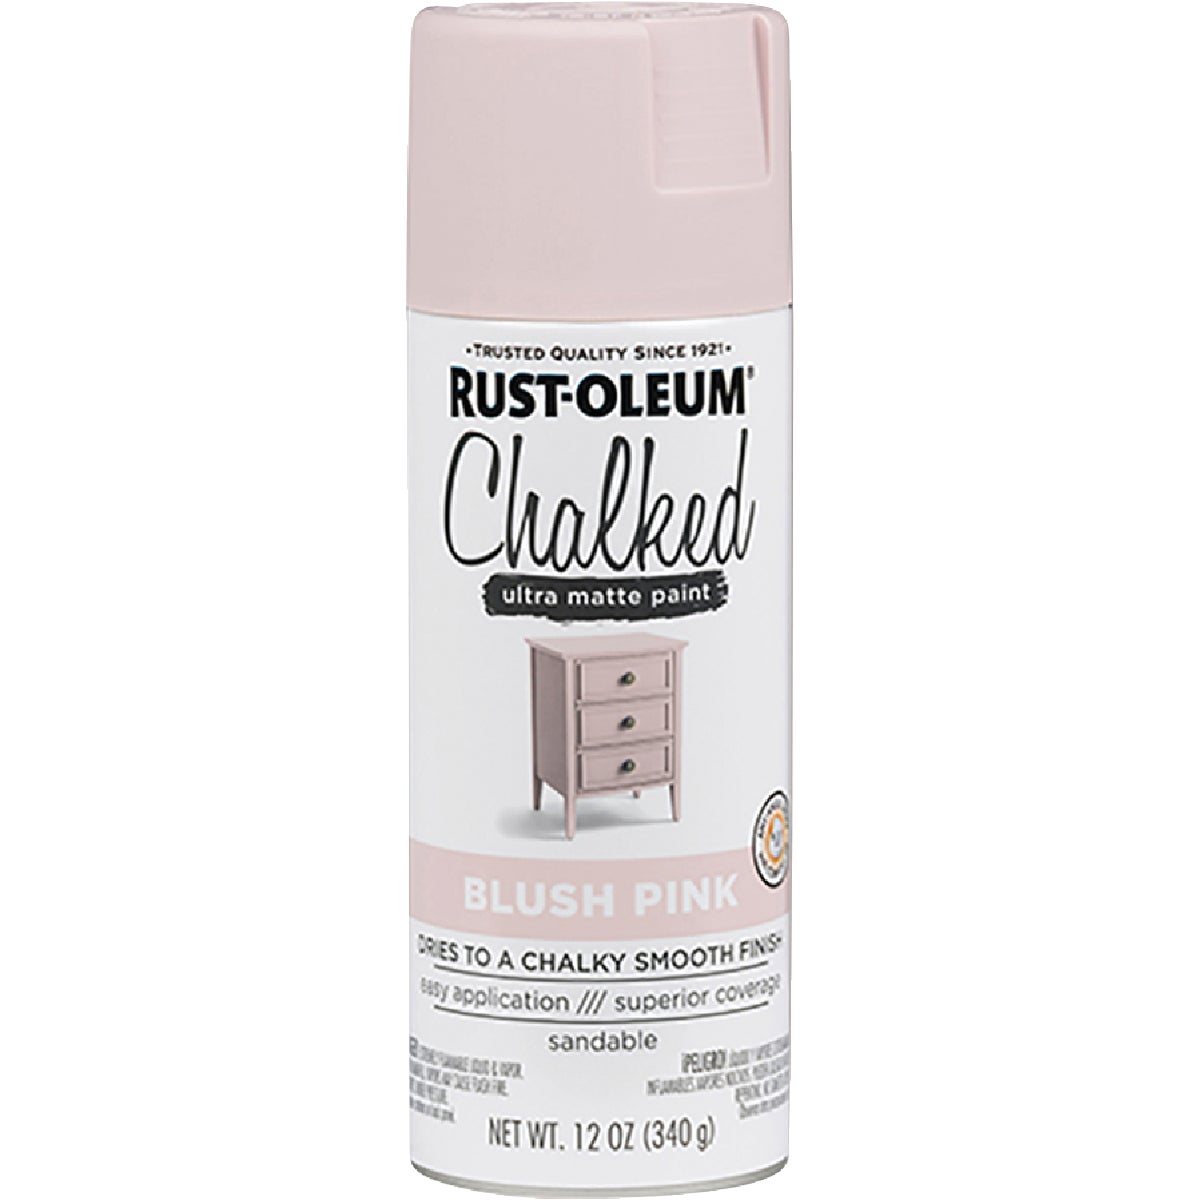 Rust-Oleum Chalked 12 Oz. Ultra Matte Spray Paint, Blush Pink